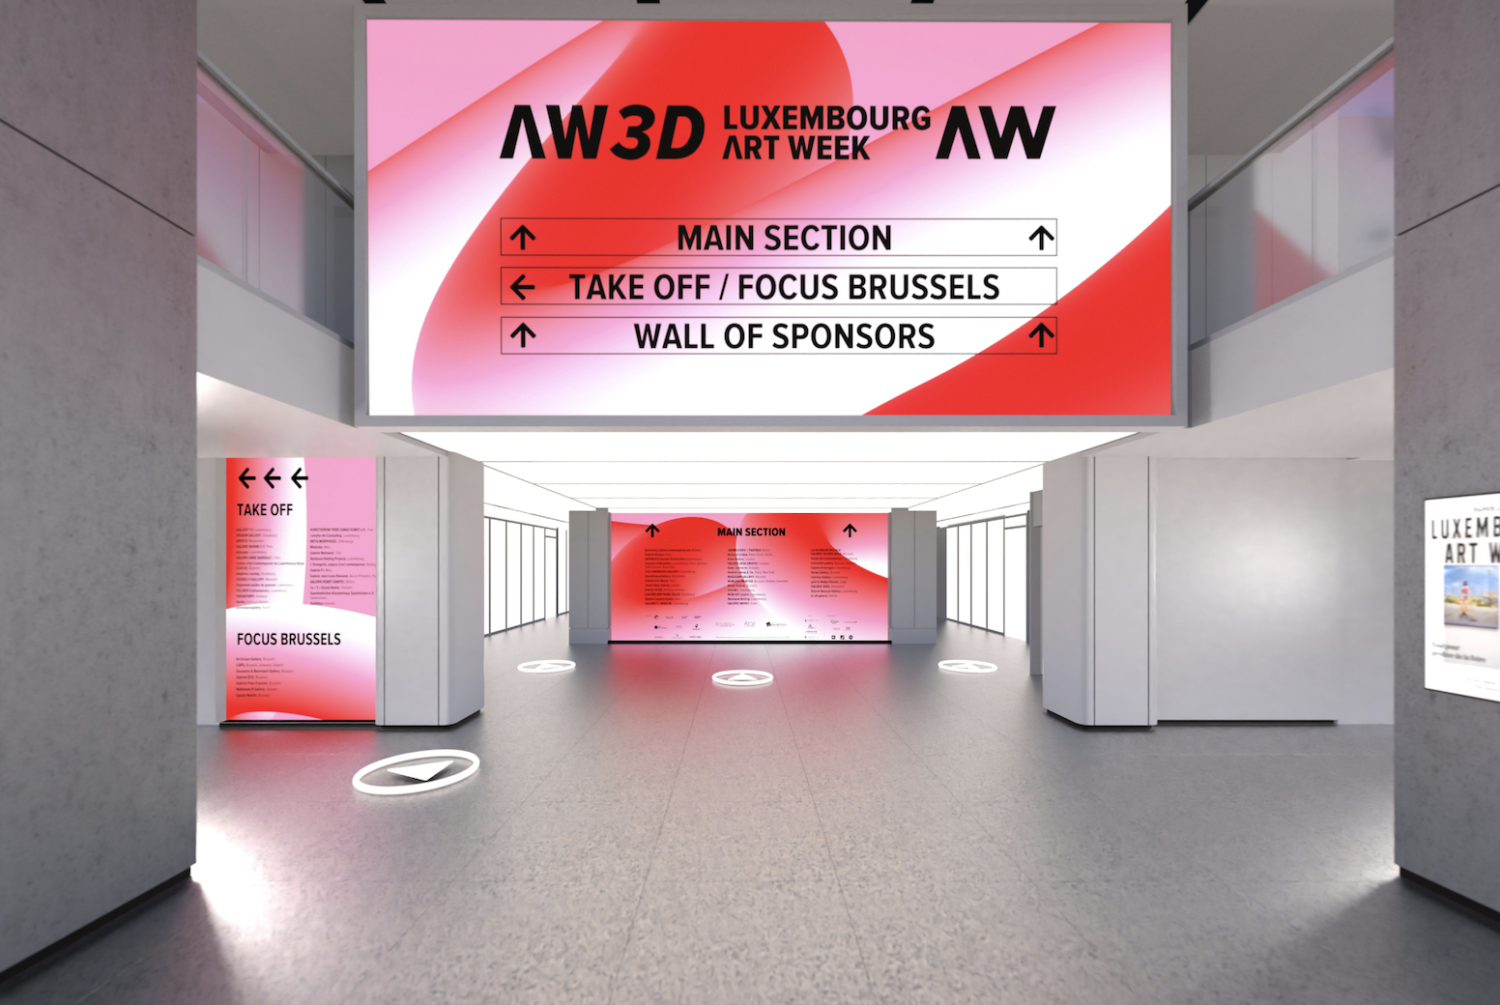 Eingang zur Luxemburg Art Week 3D-Tour.